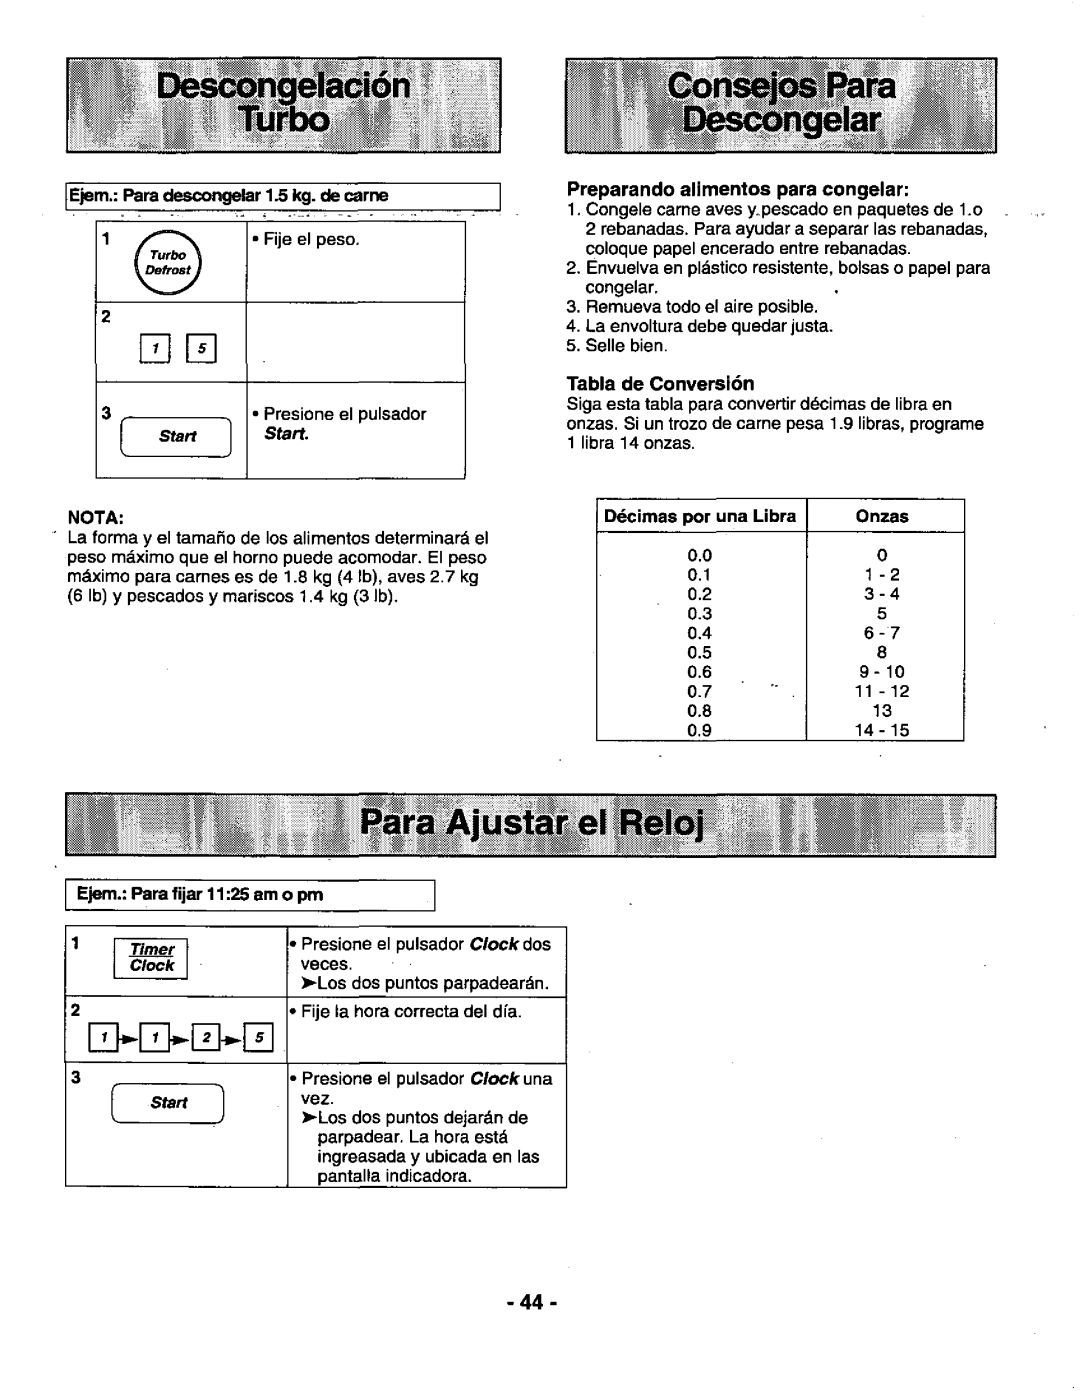 Panasonic NN-N588, NN-N688 manual 